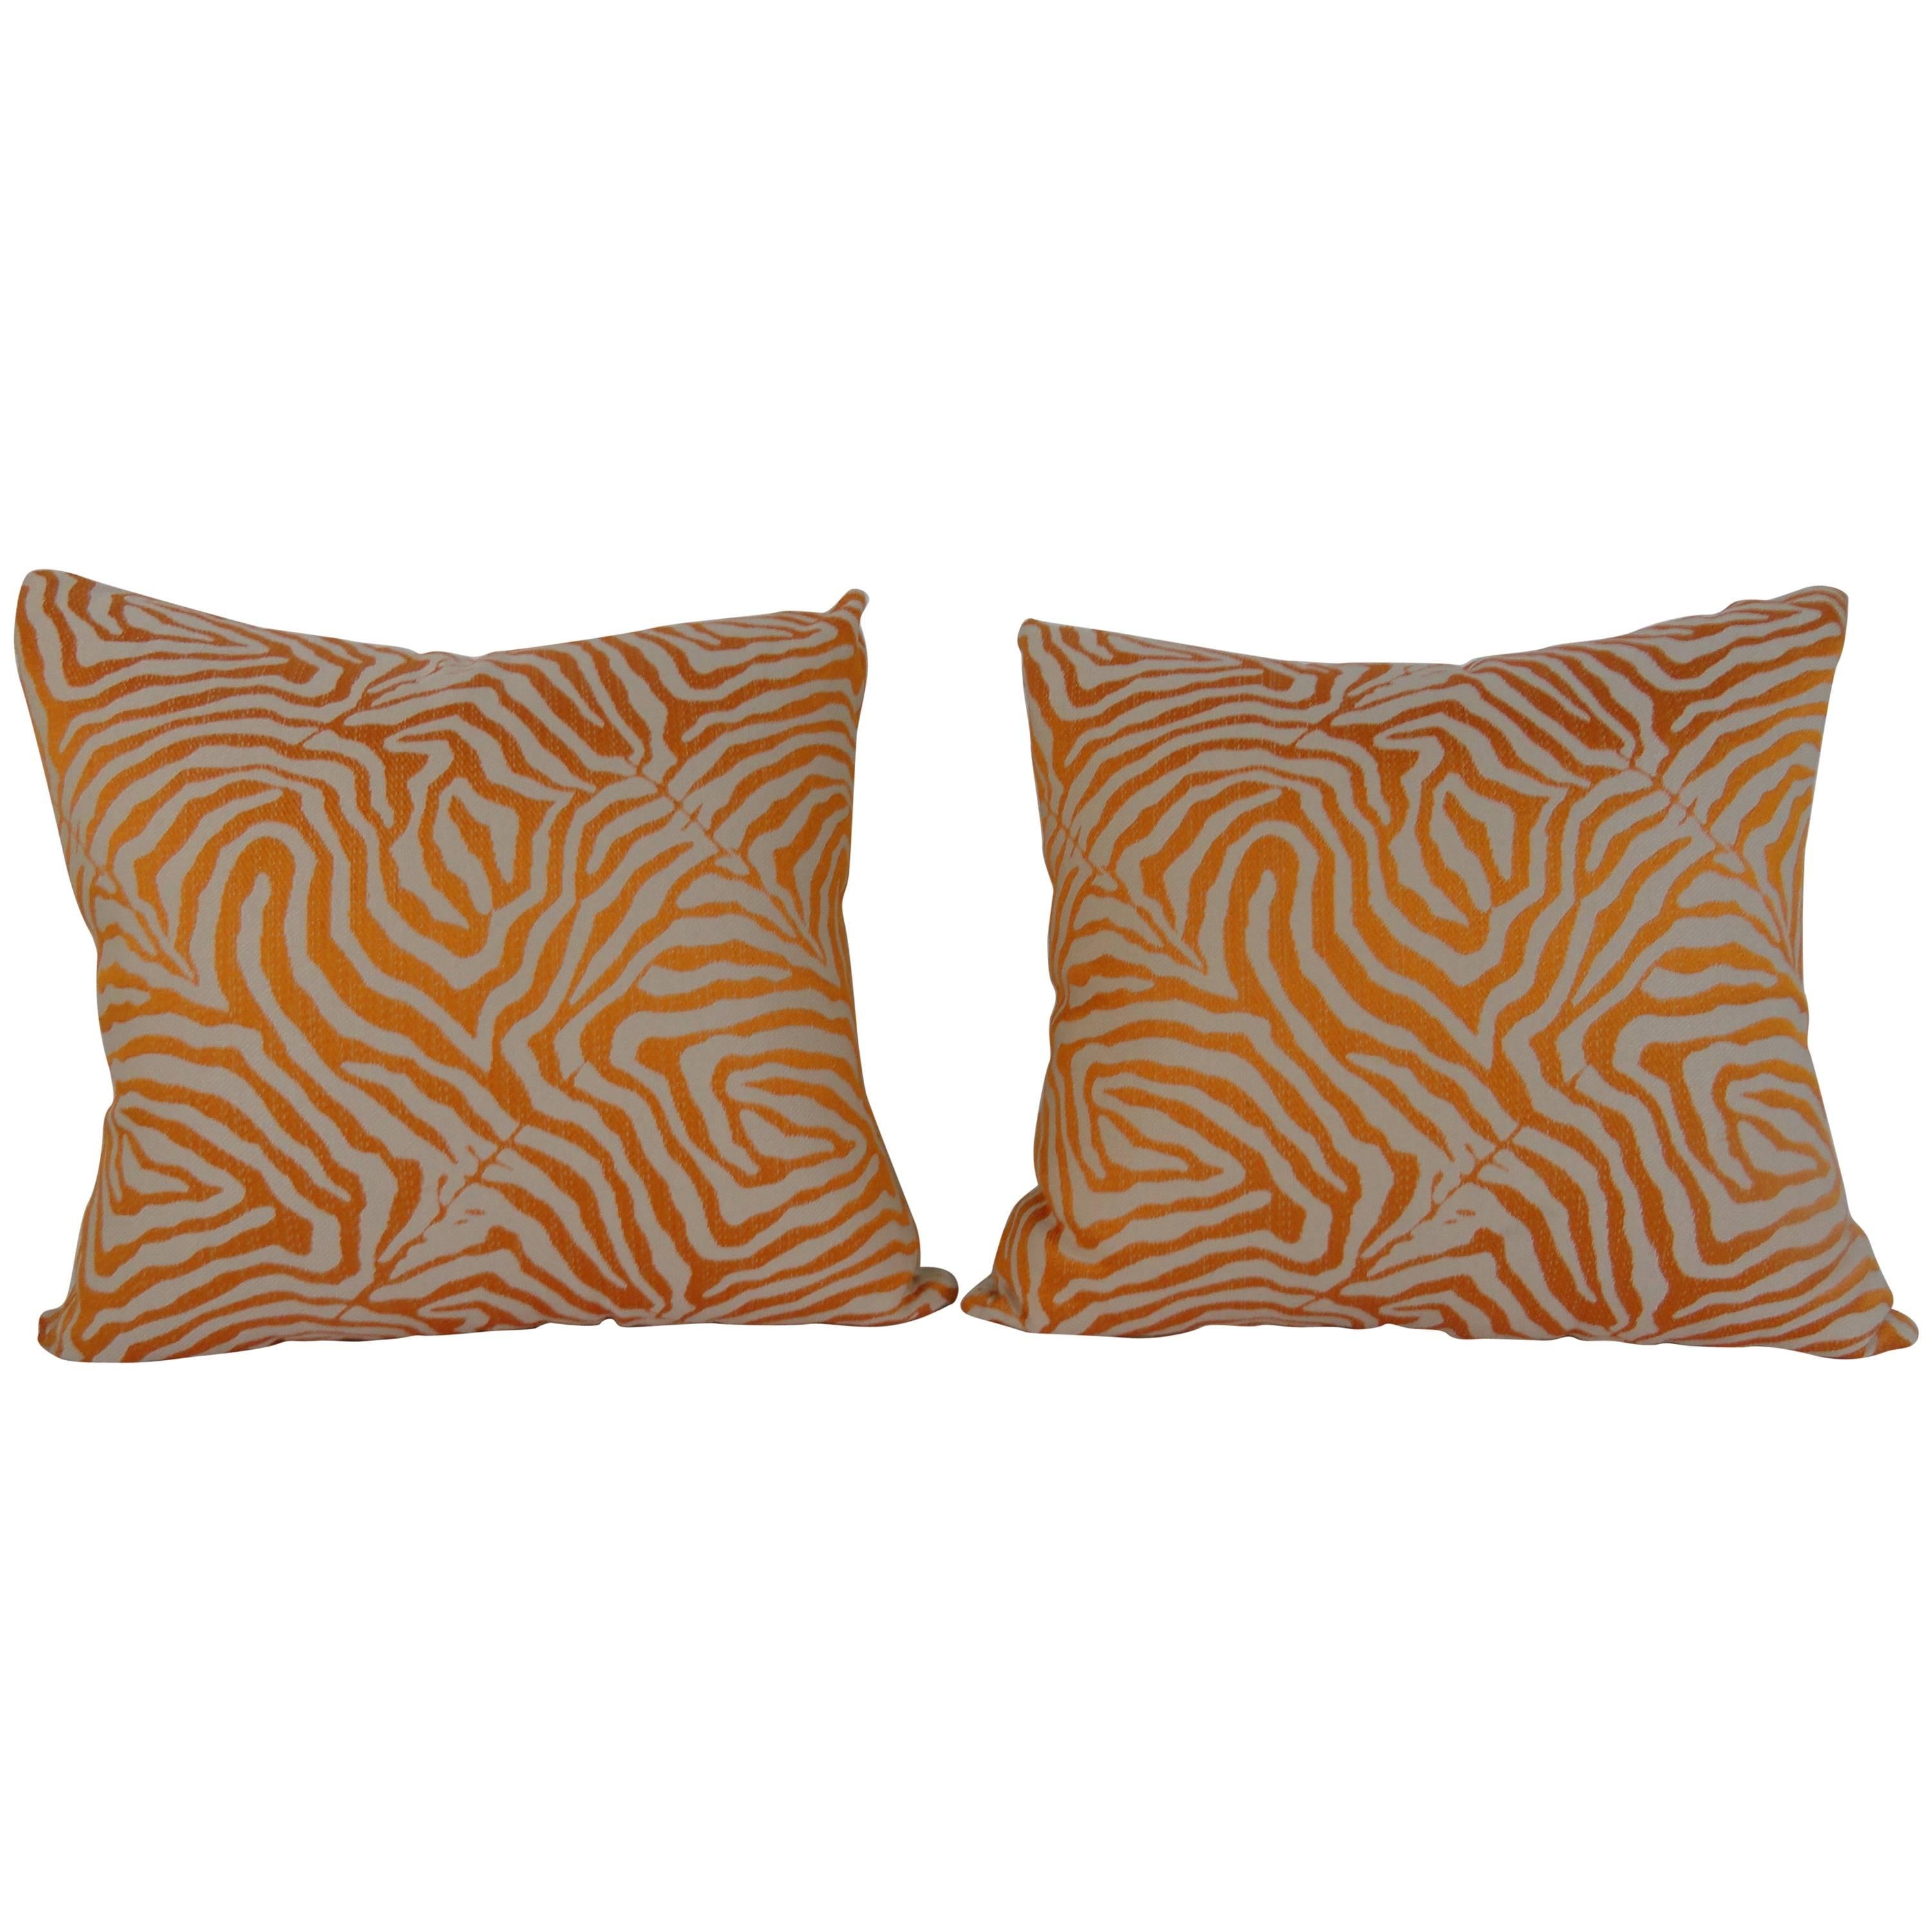 Pair of Orange Zebra Print Pillows For Sale